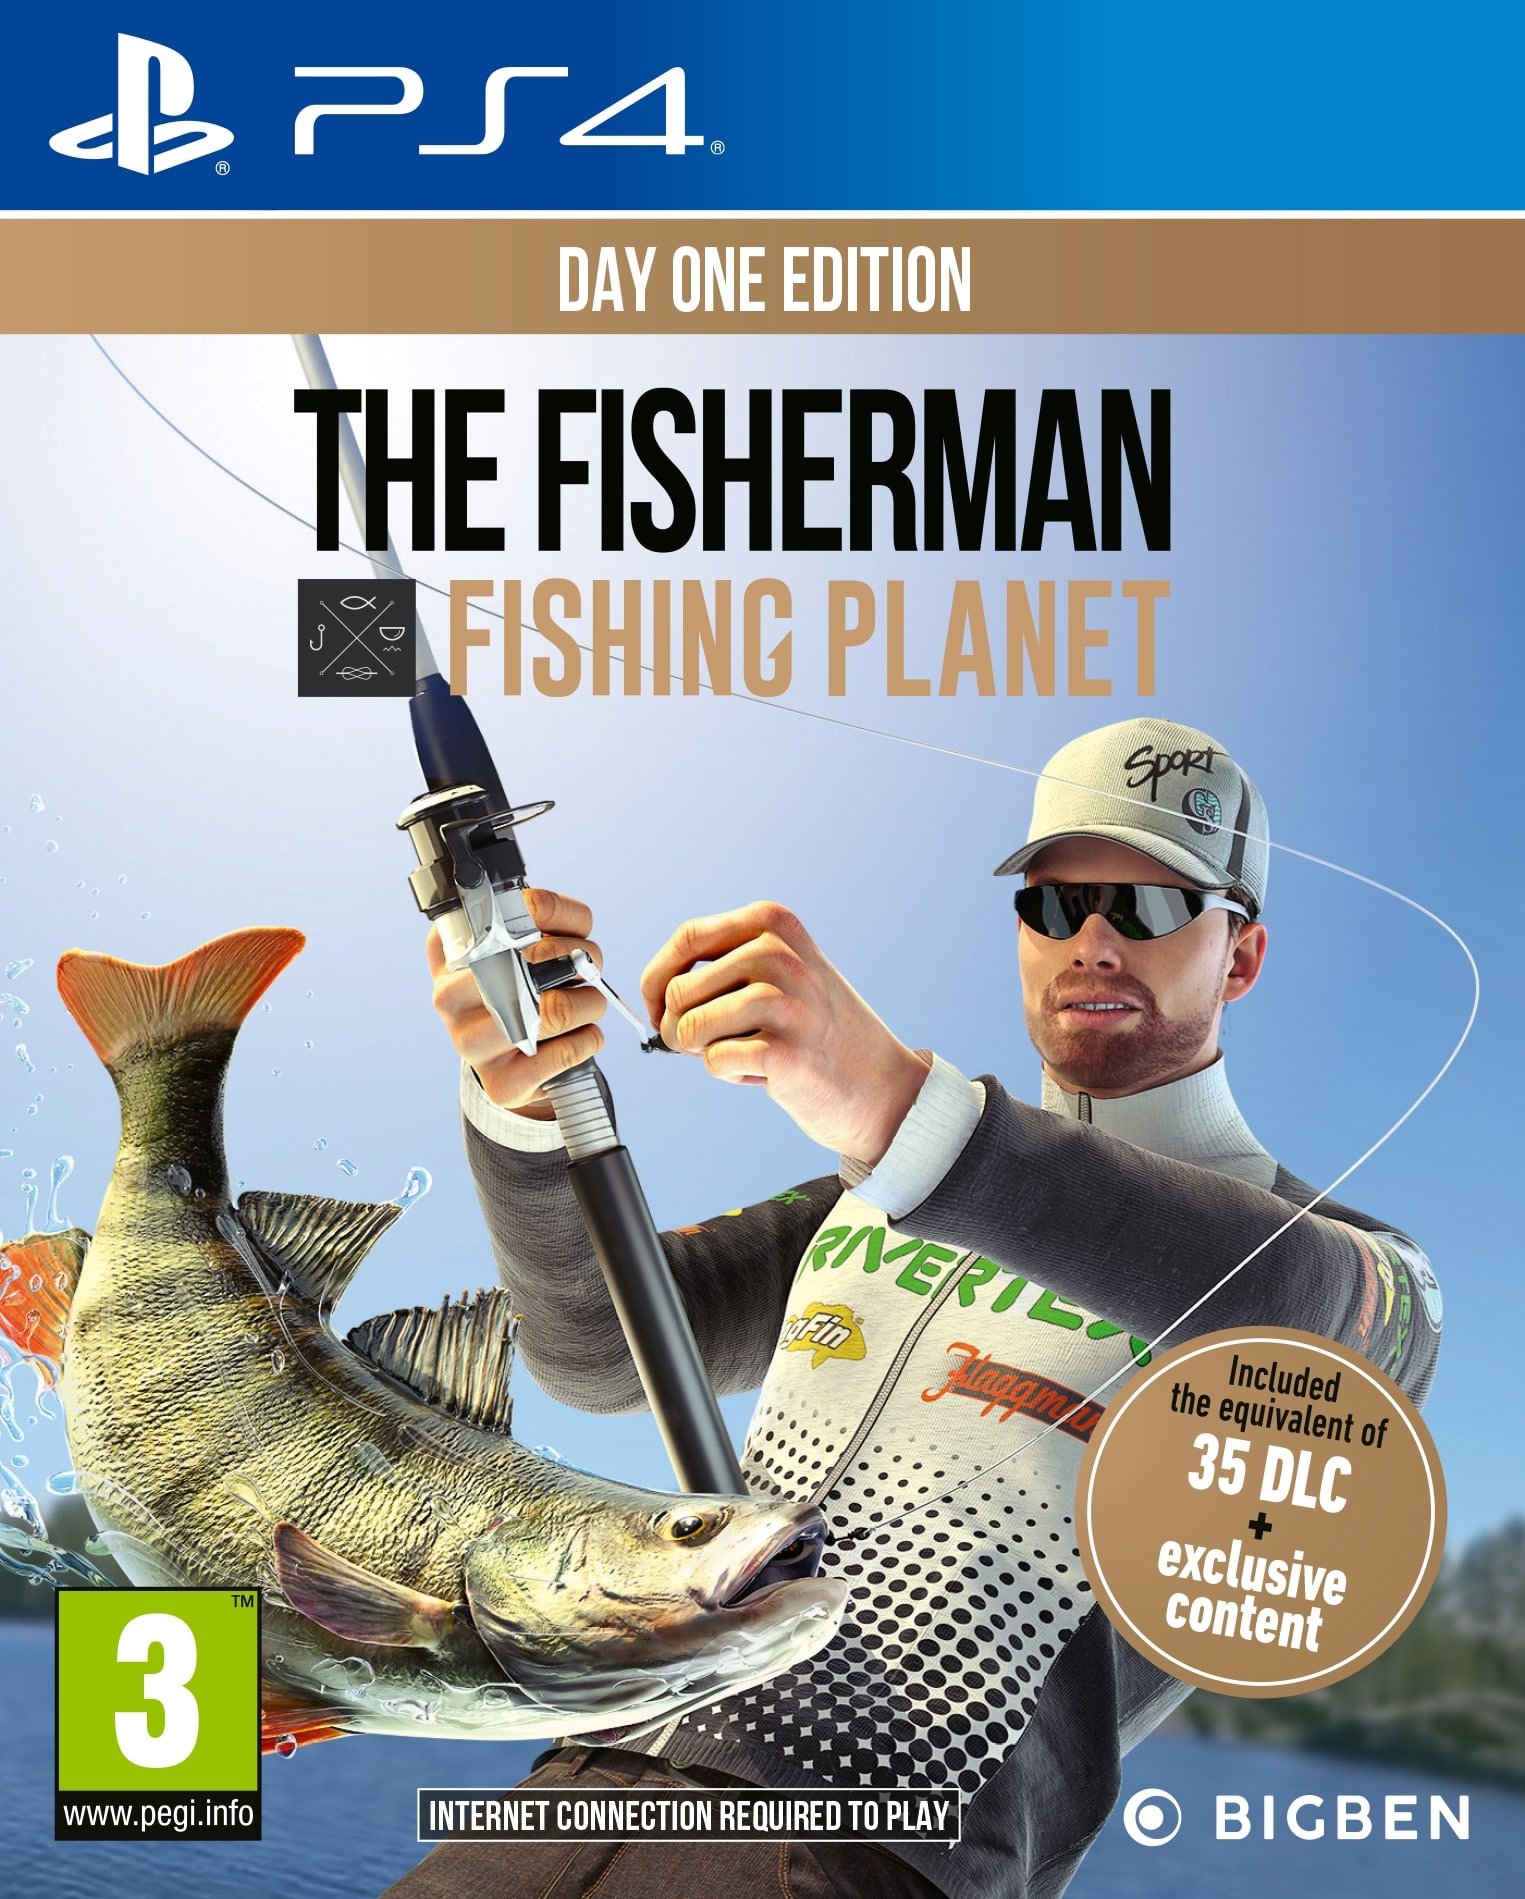 the fisherman: fishing planet poster